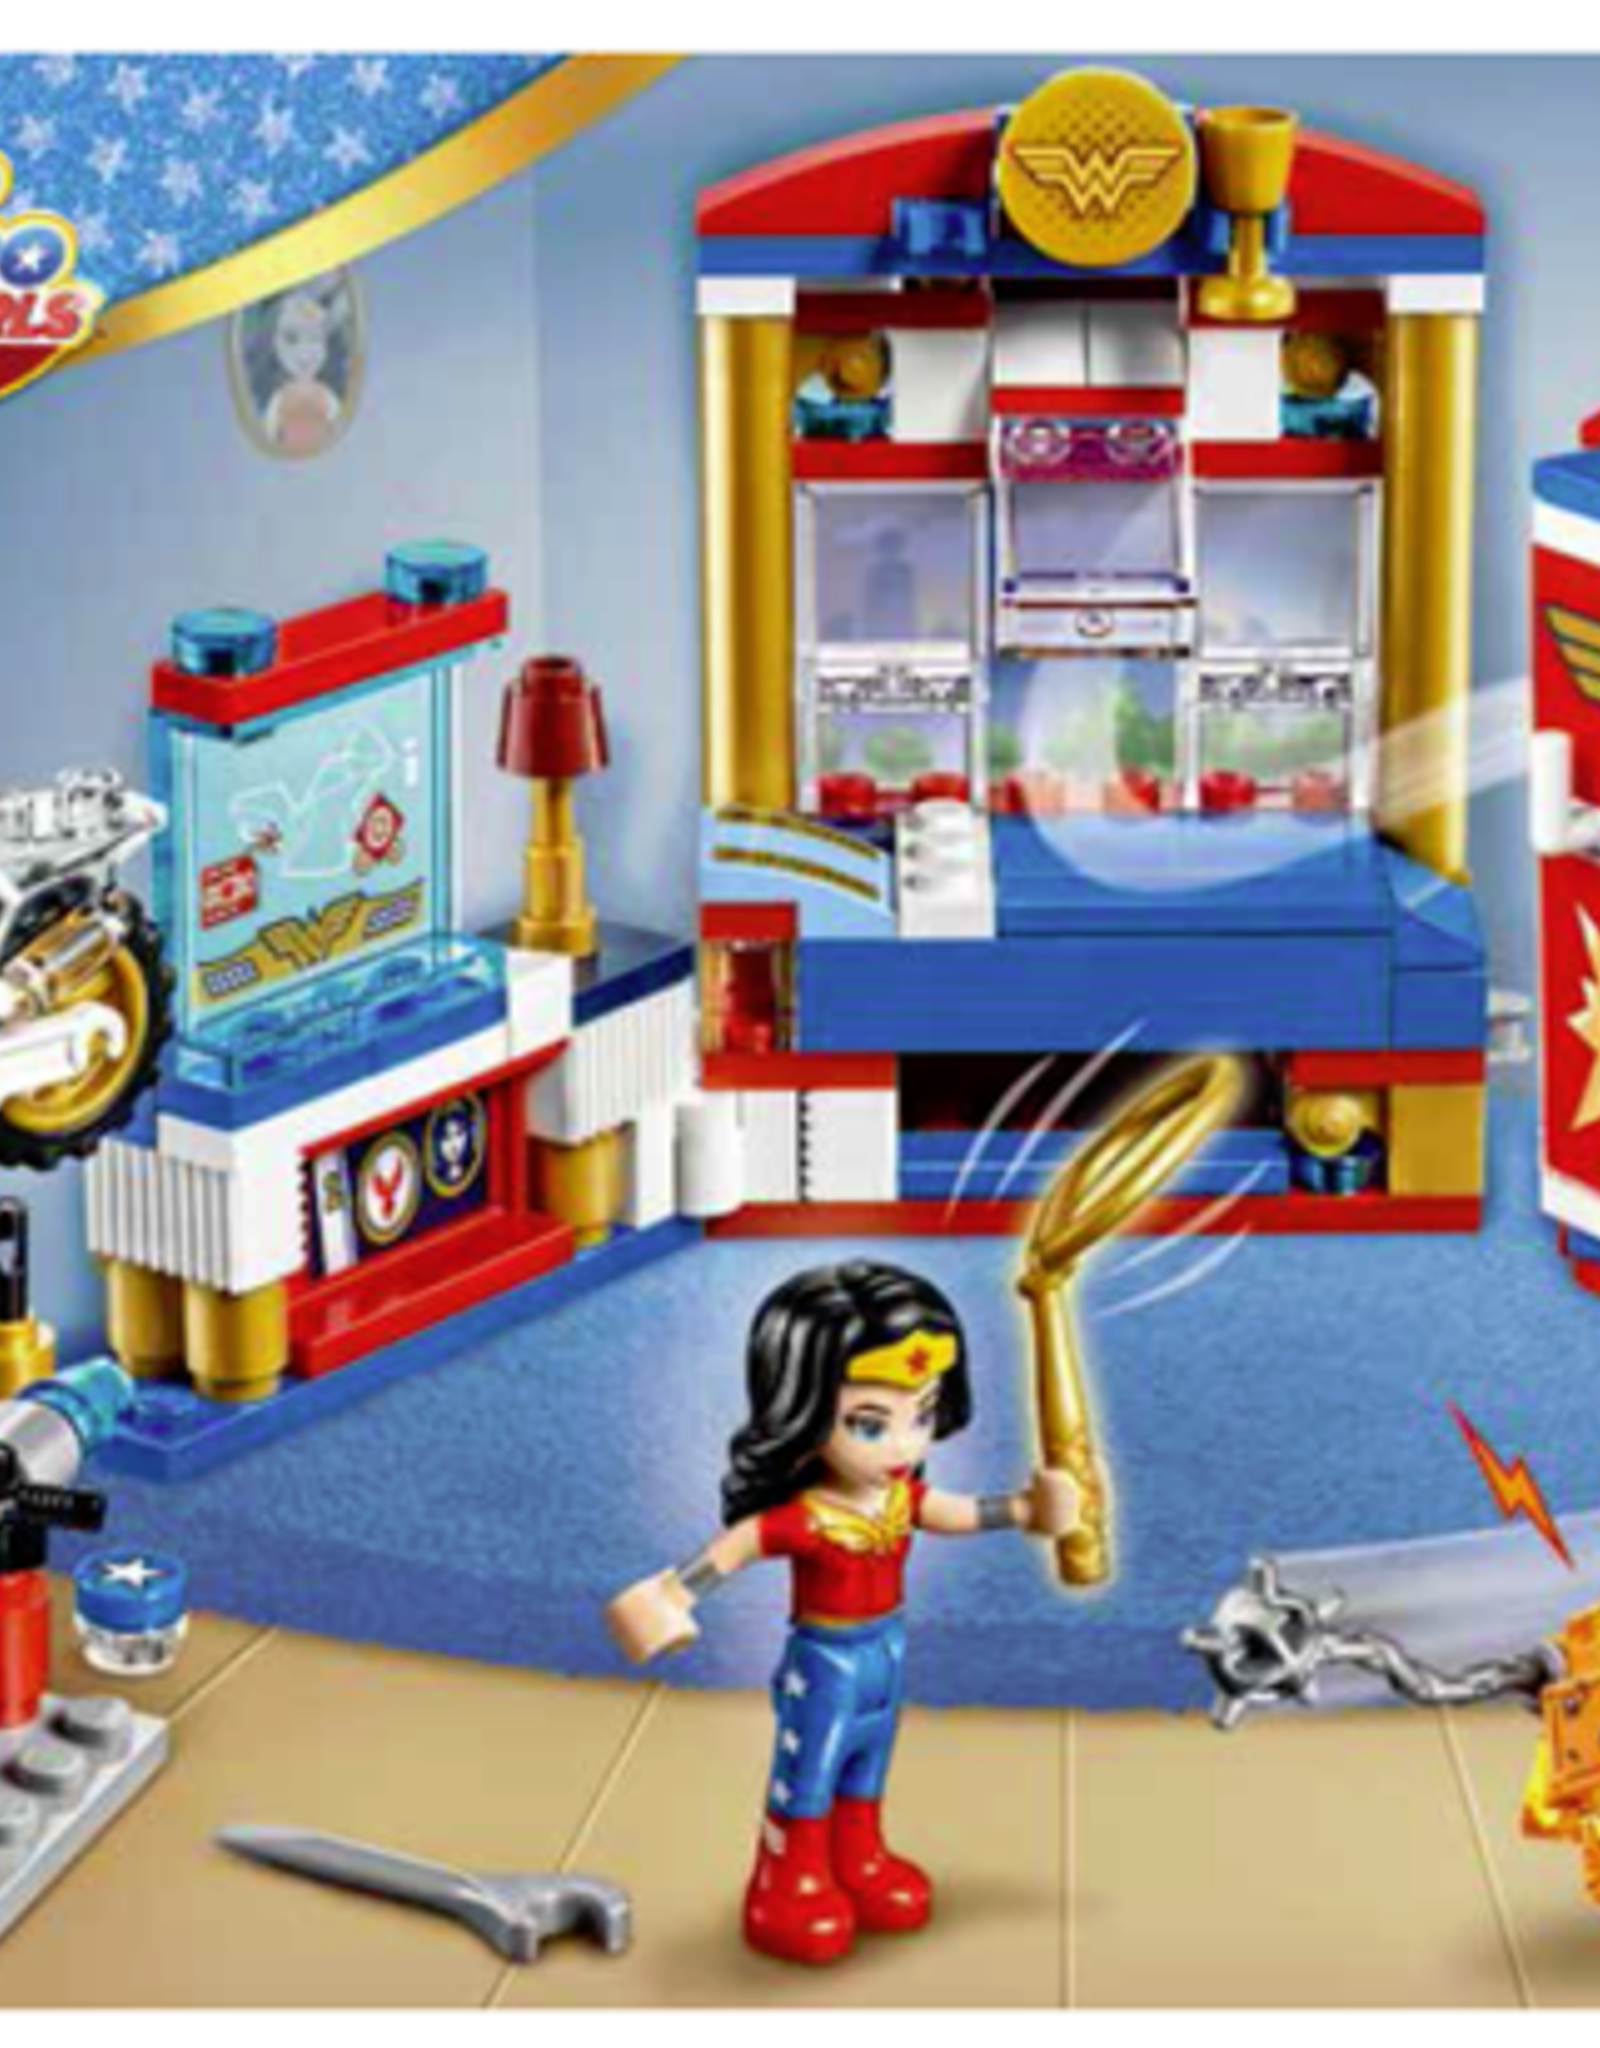 LEGO LEGO 41235 Wonder Woman Dorm SUPER HERO GIRLS